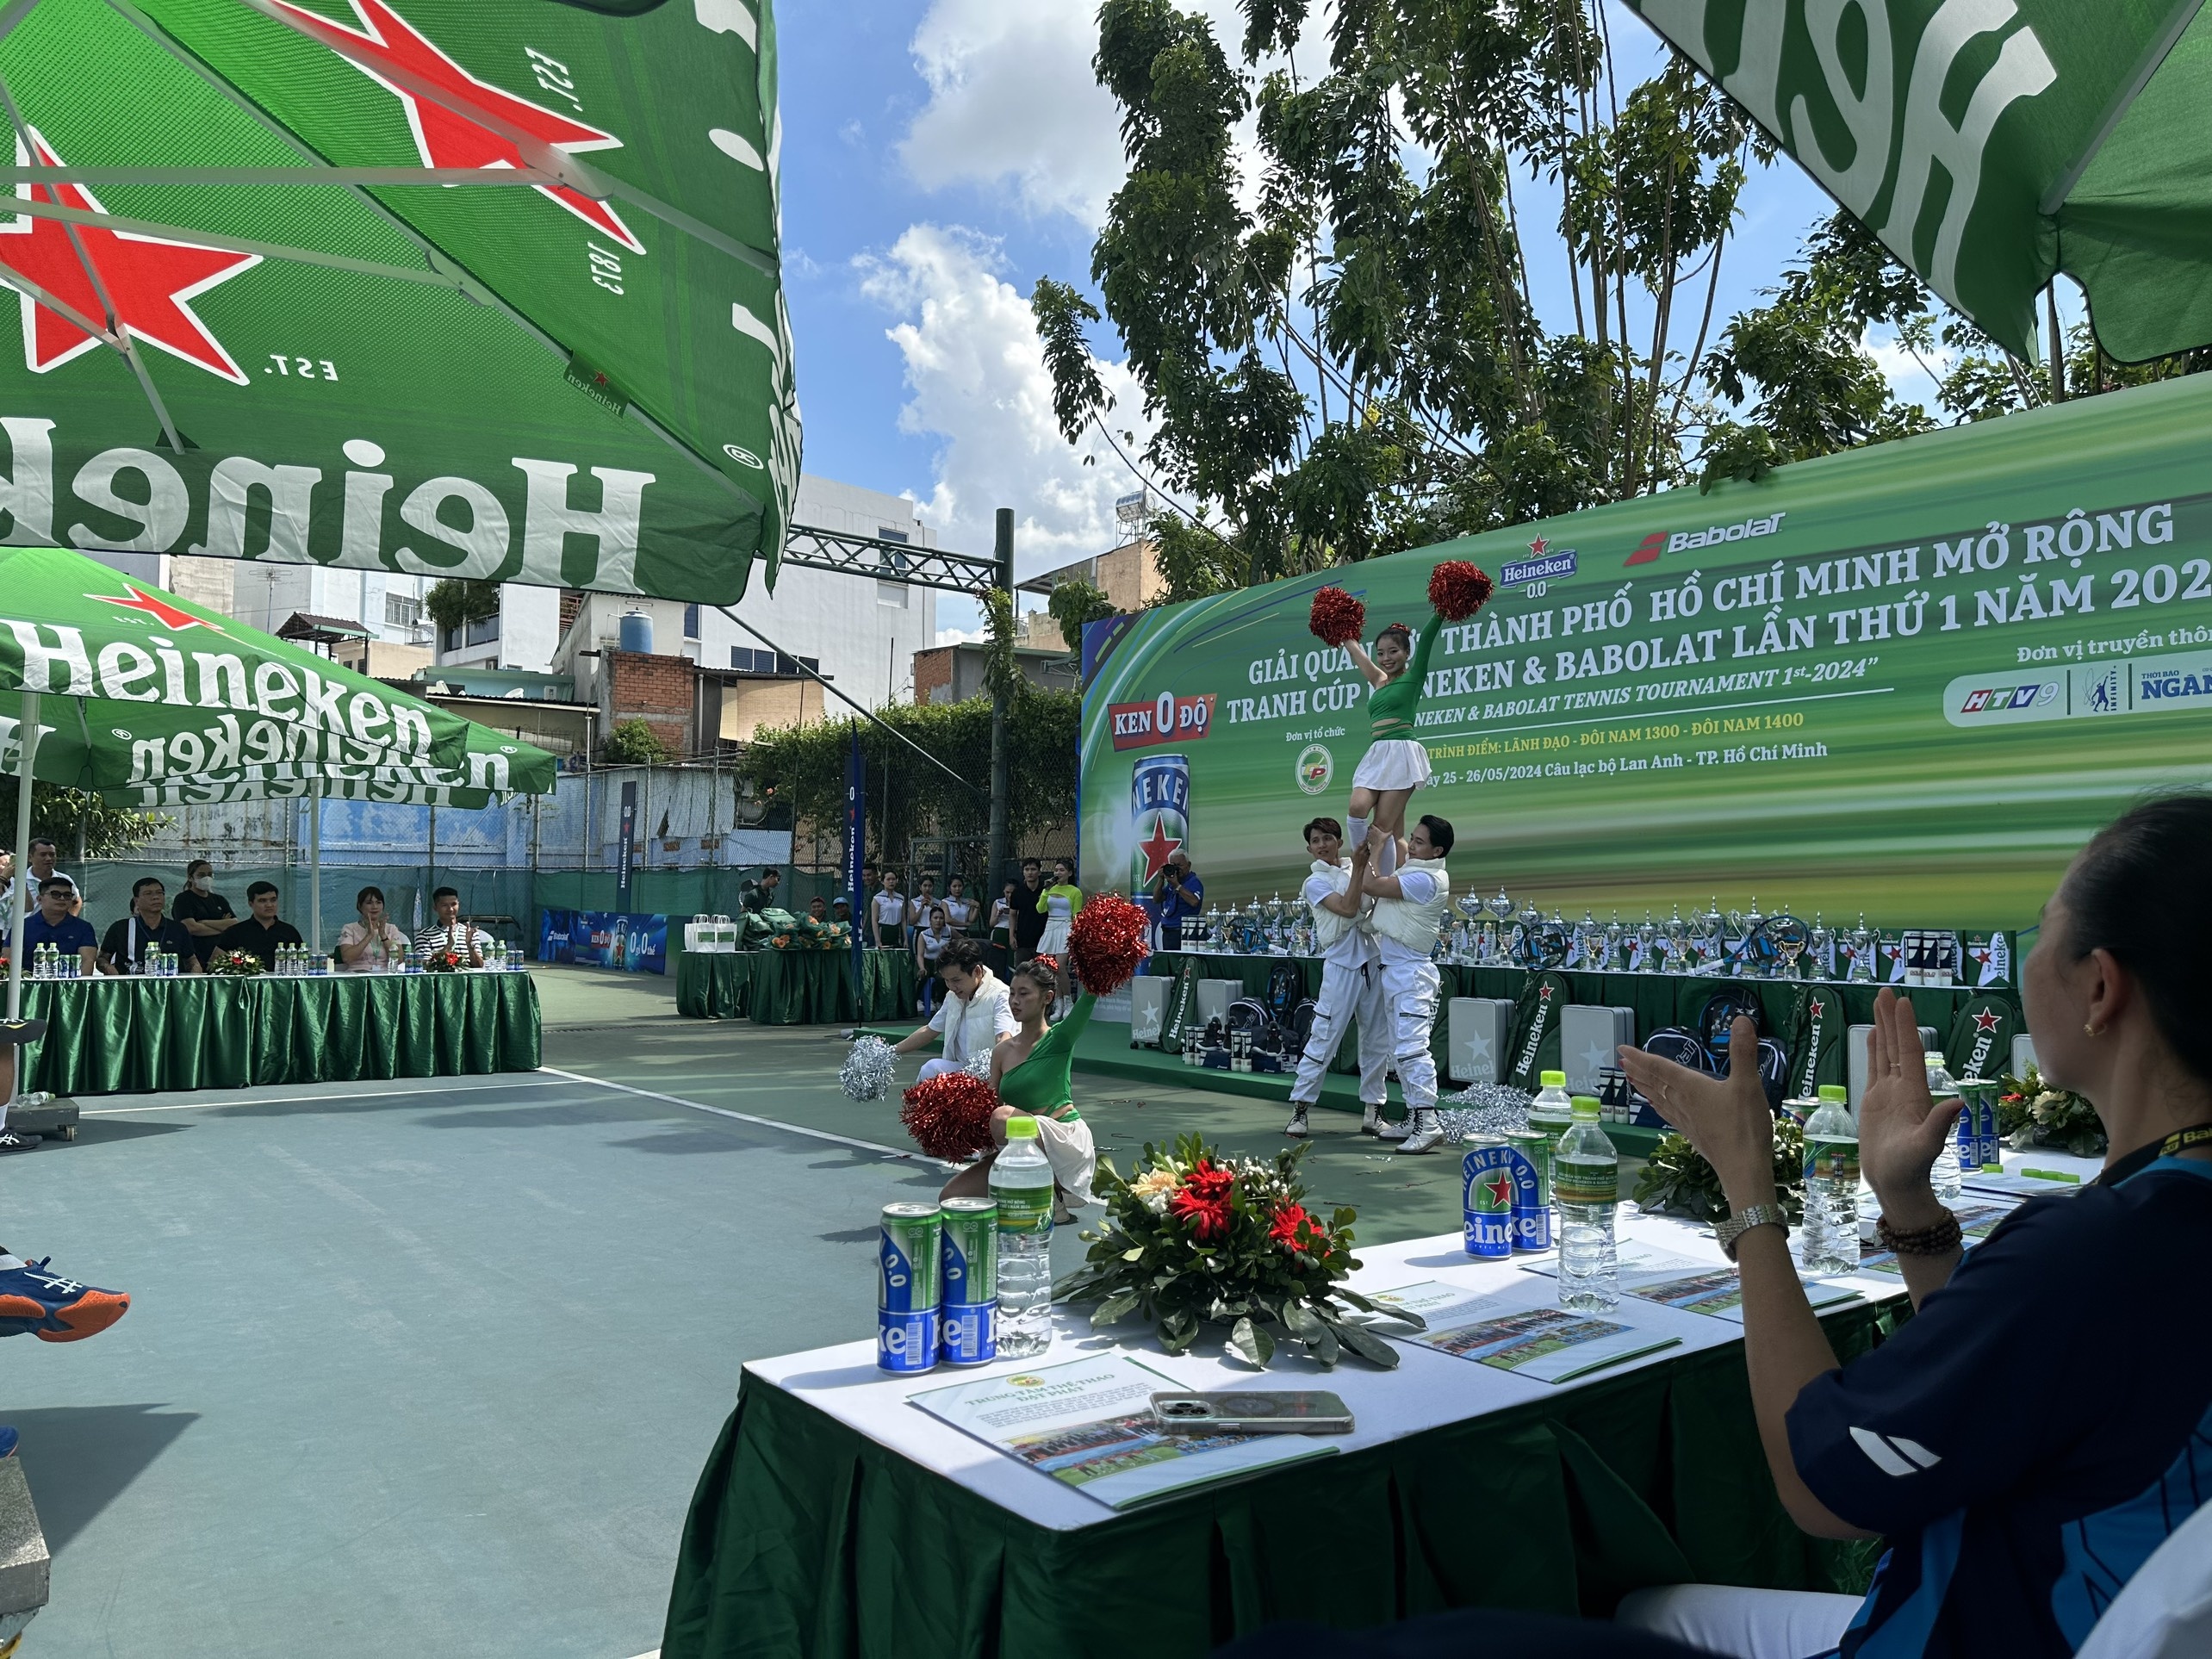 TP.Hồ Chí Minh: Khởi tranh cup Heineken & Babolat